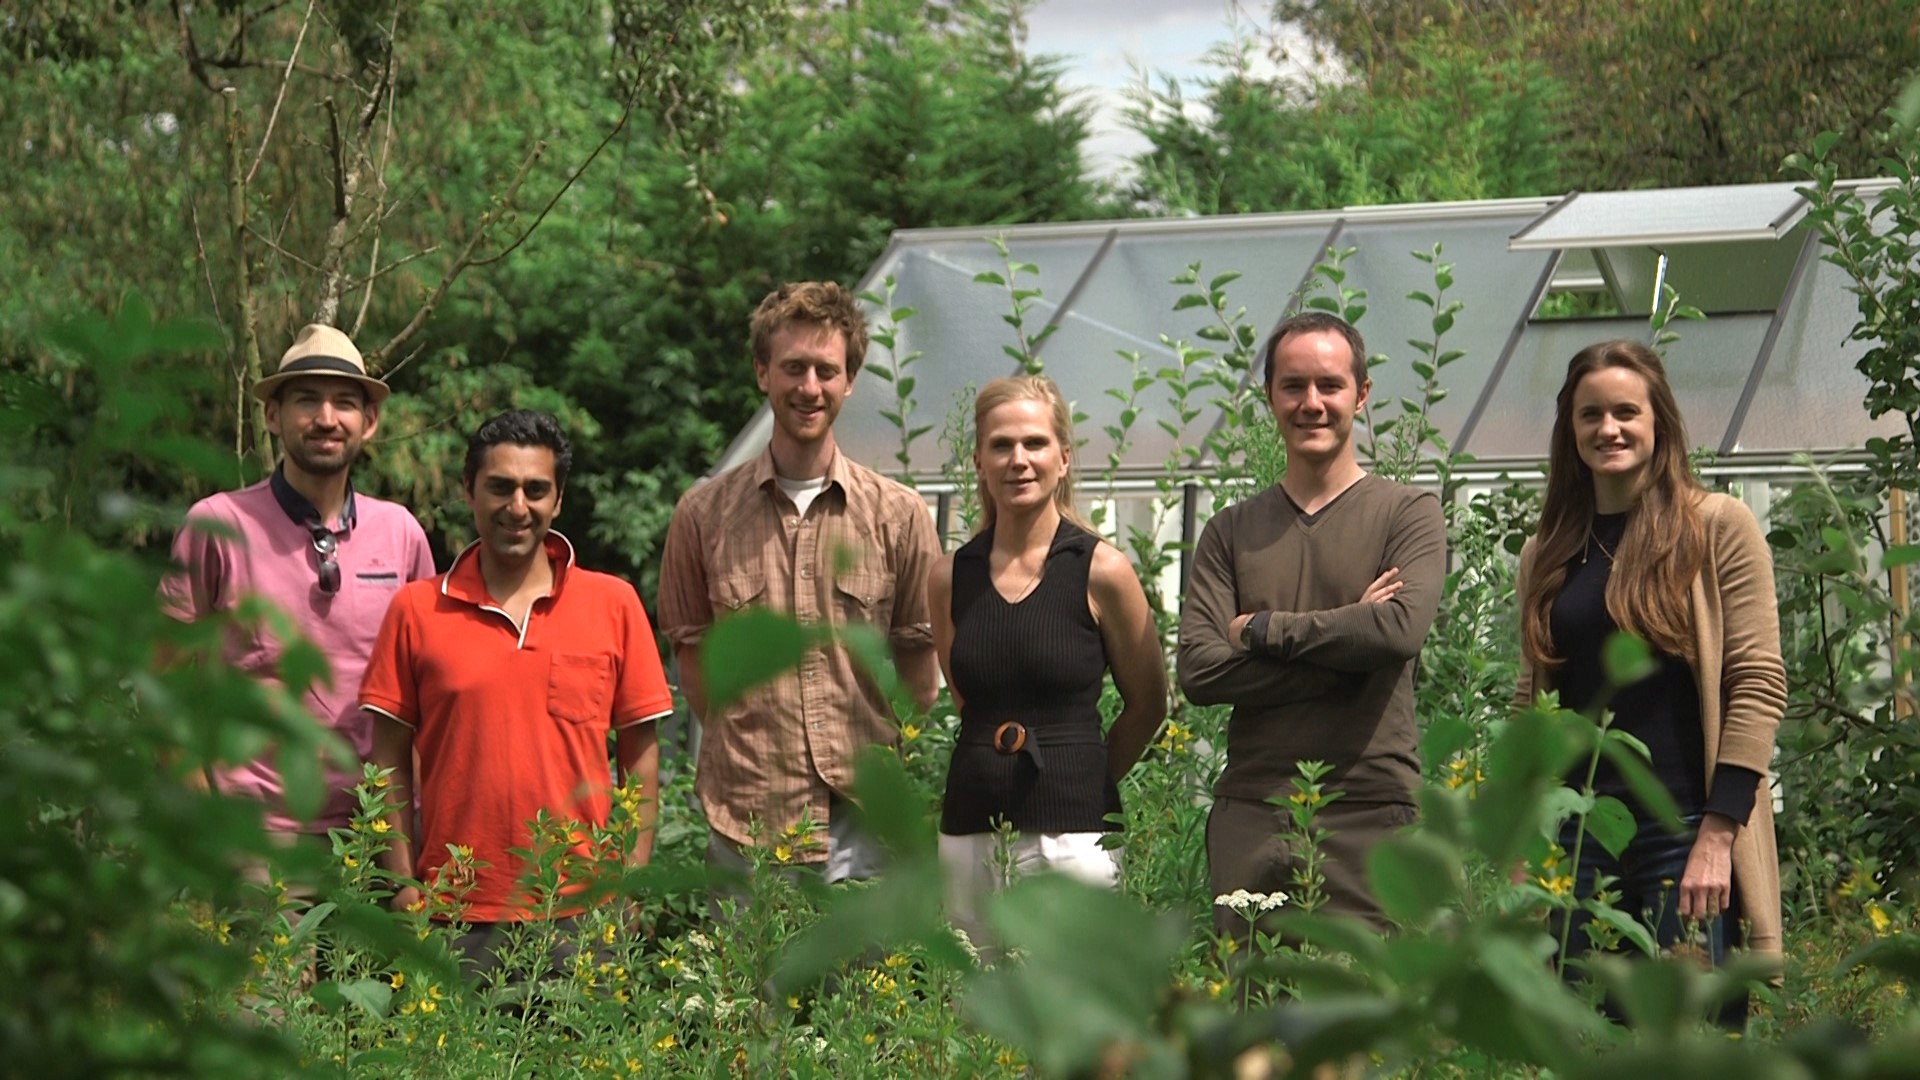 myfood Pioneers Sustainable Greenhouse Kit in Europe